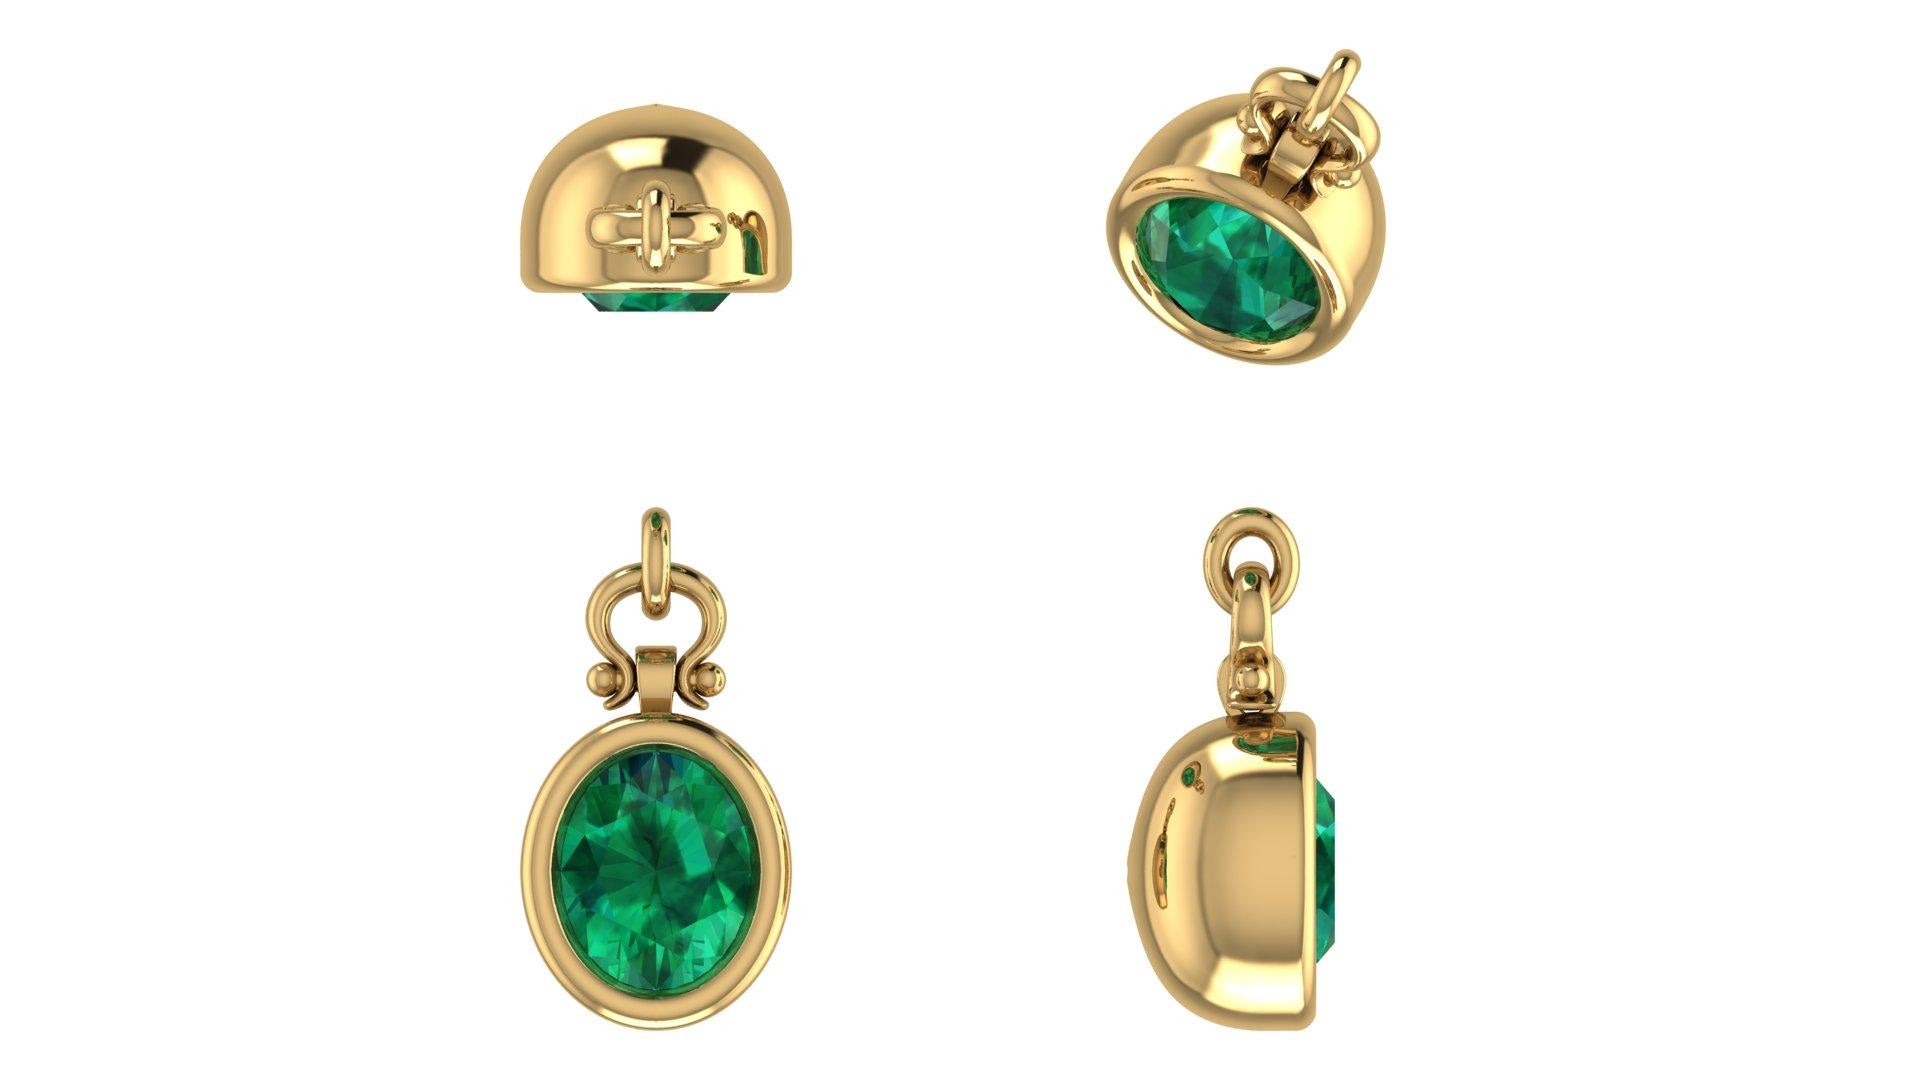 3.04 Carat Oval Cut Emerald Pendant Necklace in 18k For Sale 3